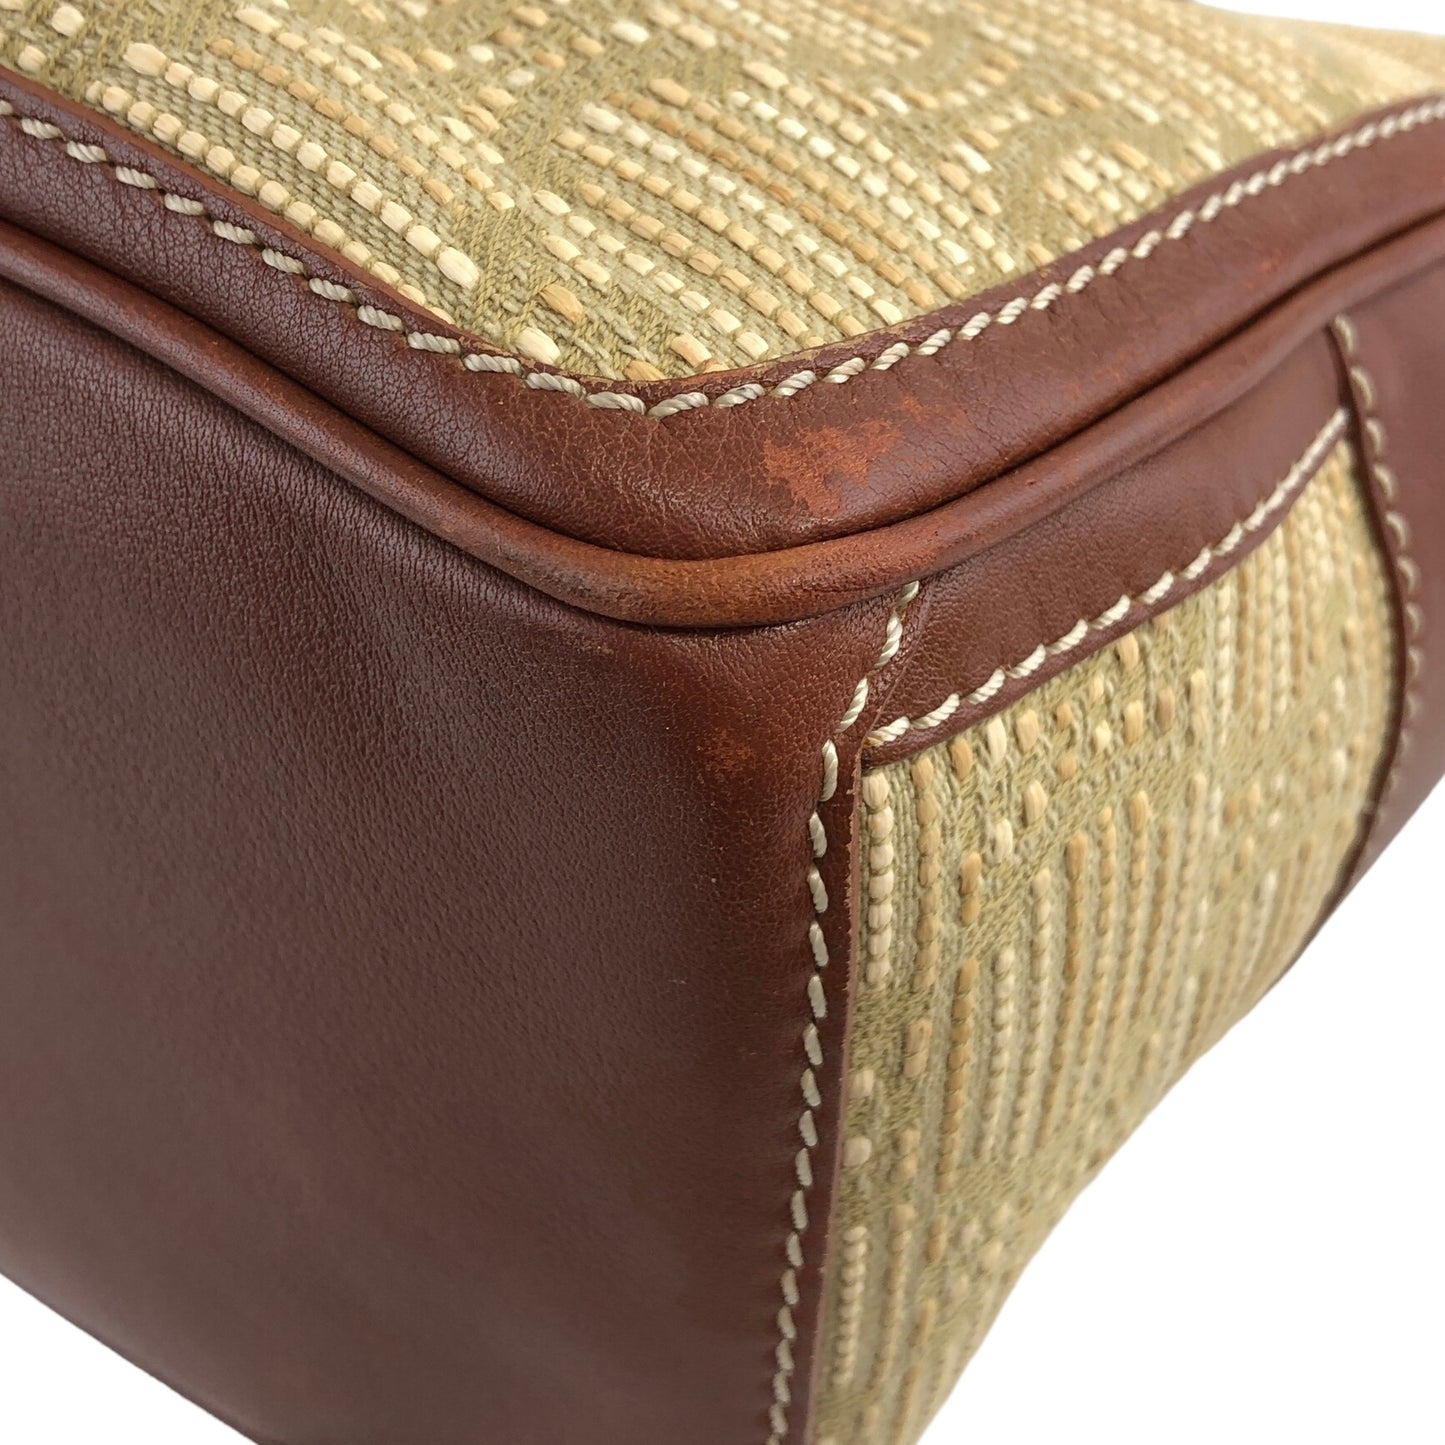 CELINE Blason Handbag Beige Vintage k5pnxb